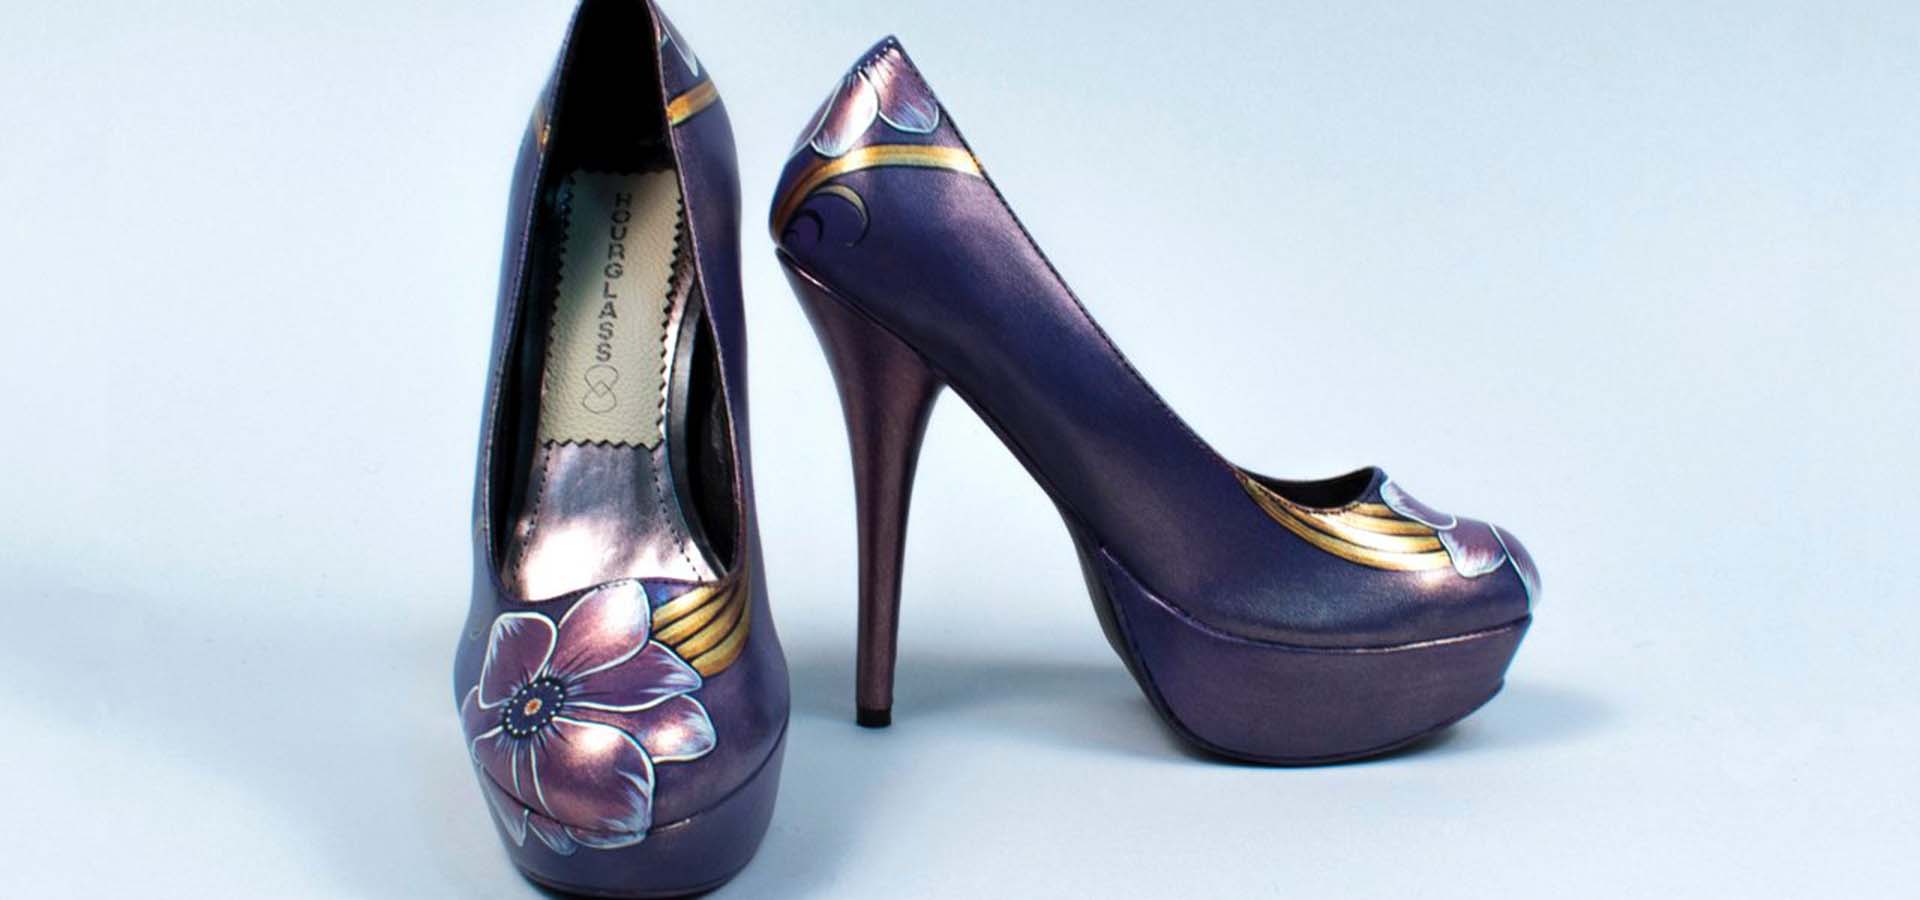 Pair of purple platform high-heel shoes painted with purple flowers.